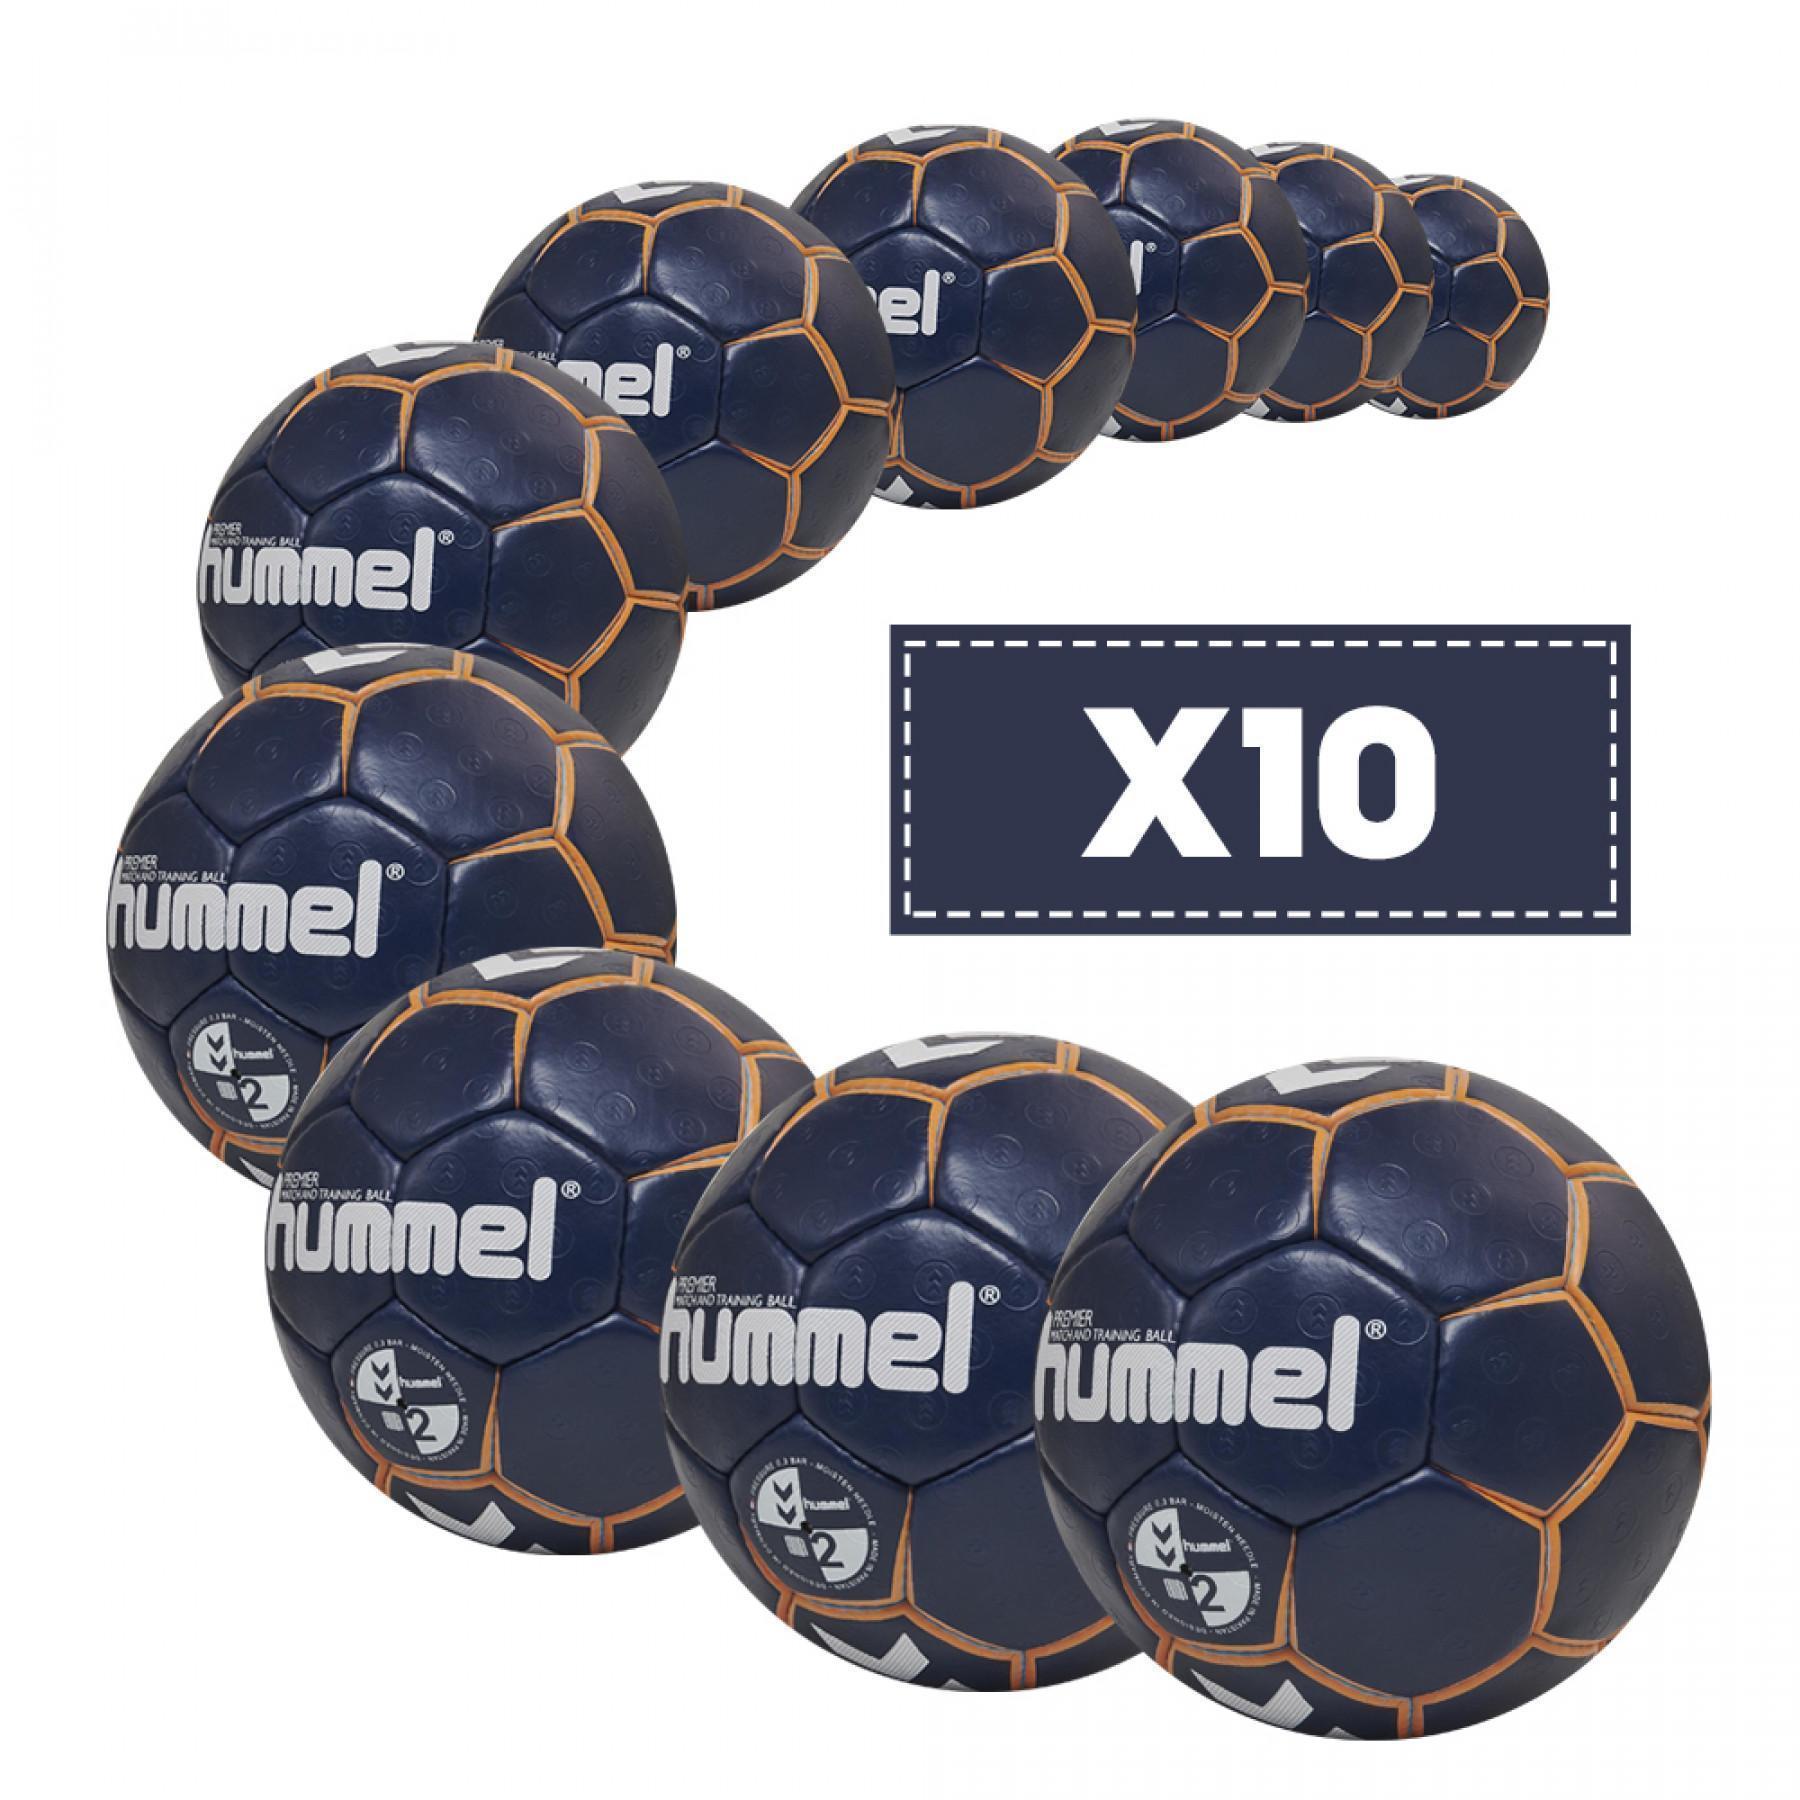 Packung mit 10 Luftballons Hummel Premier 